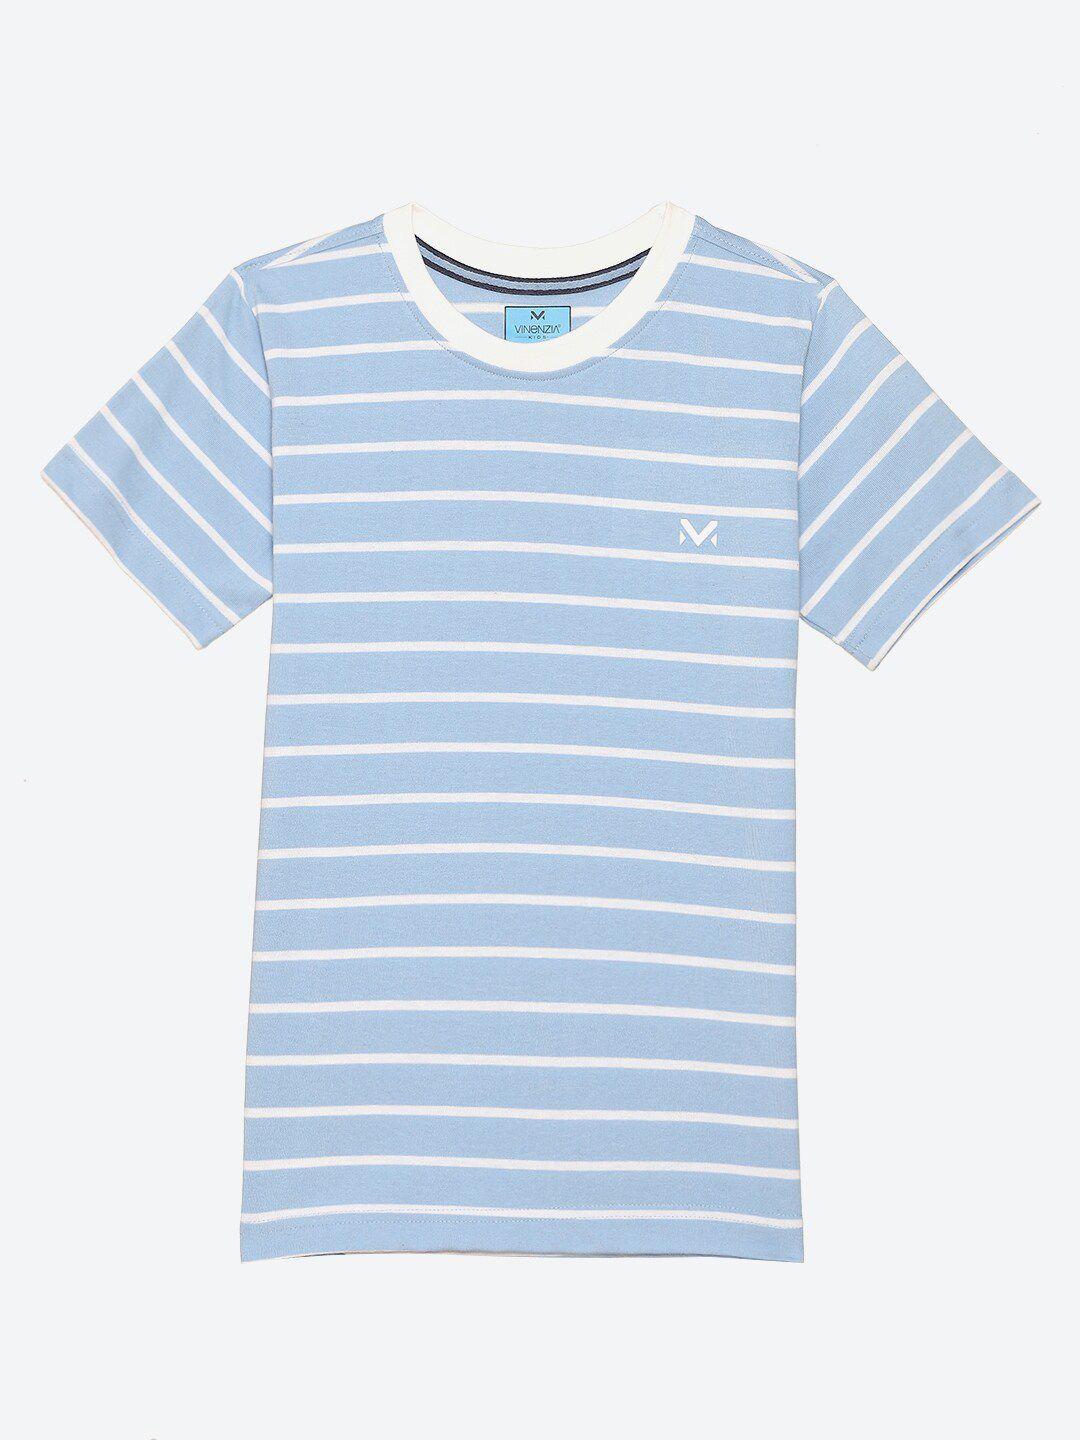 vinenzia boys blue striped extended sleeves t-shirt